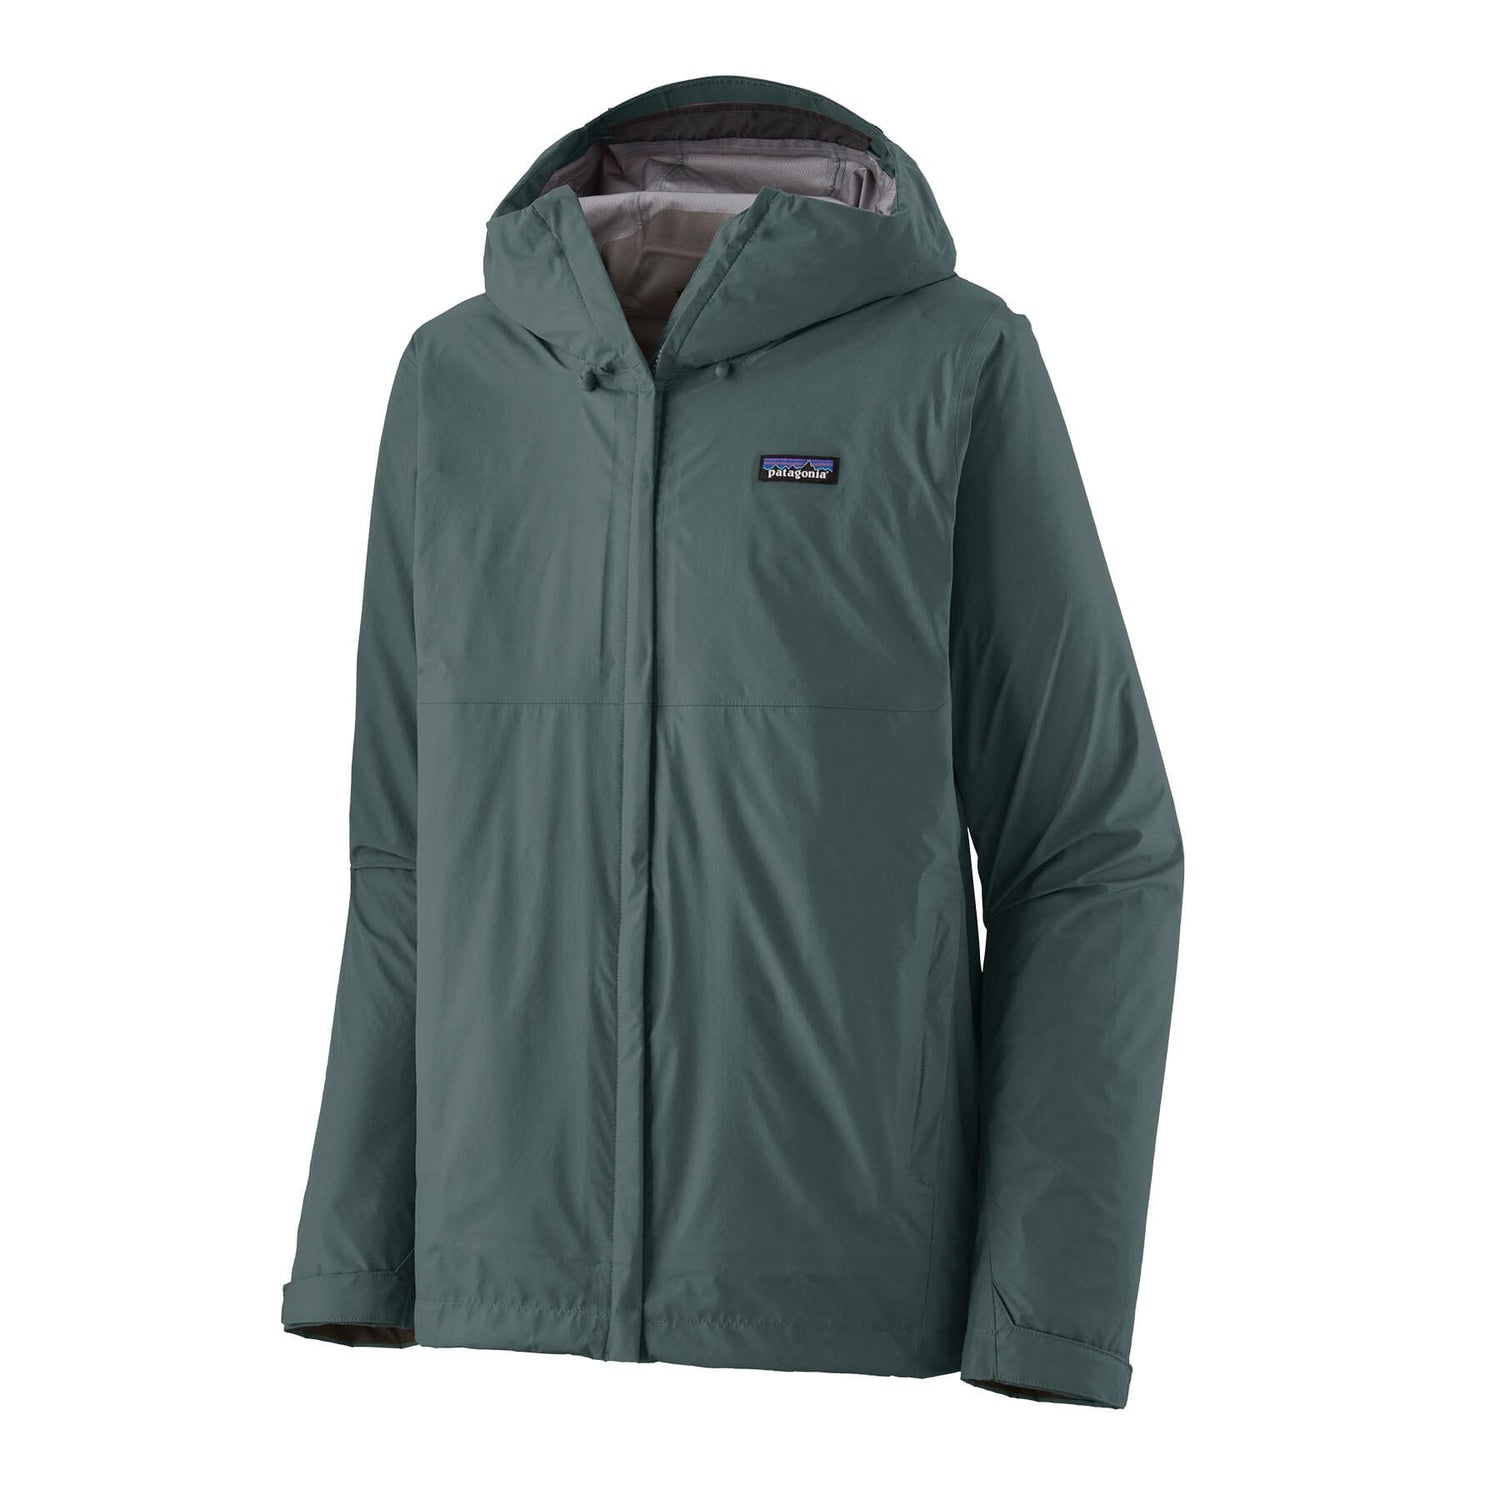 Patagonia M's Torrentshell 3L Jacket - 100% Recycled Nylon Nouveau Green Jacket